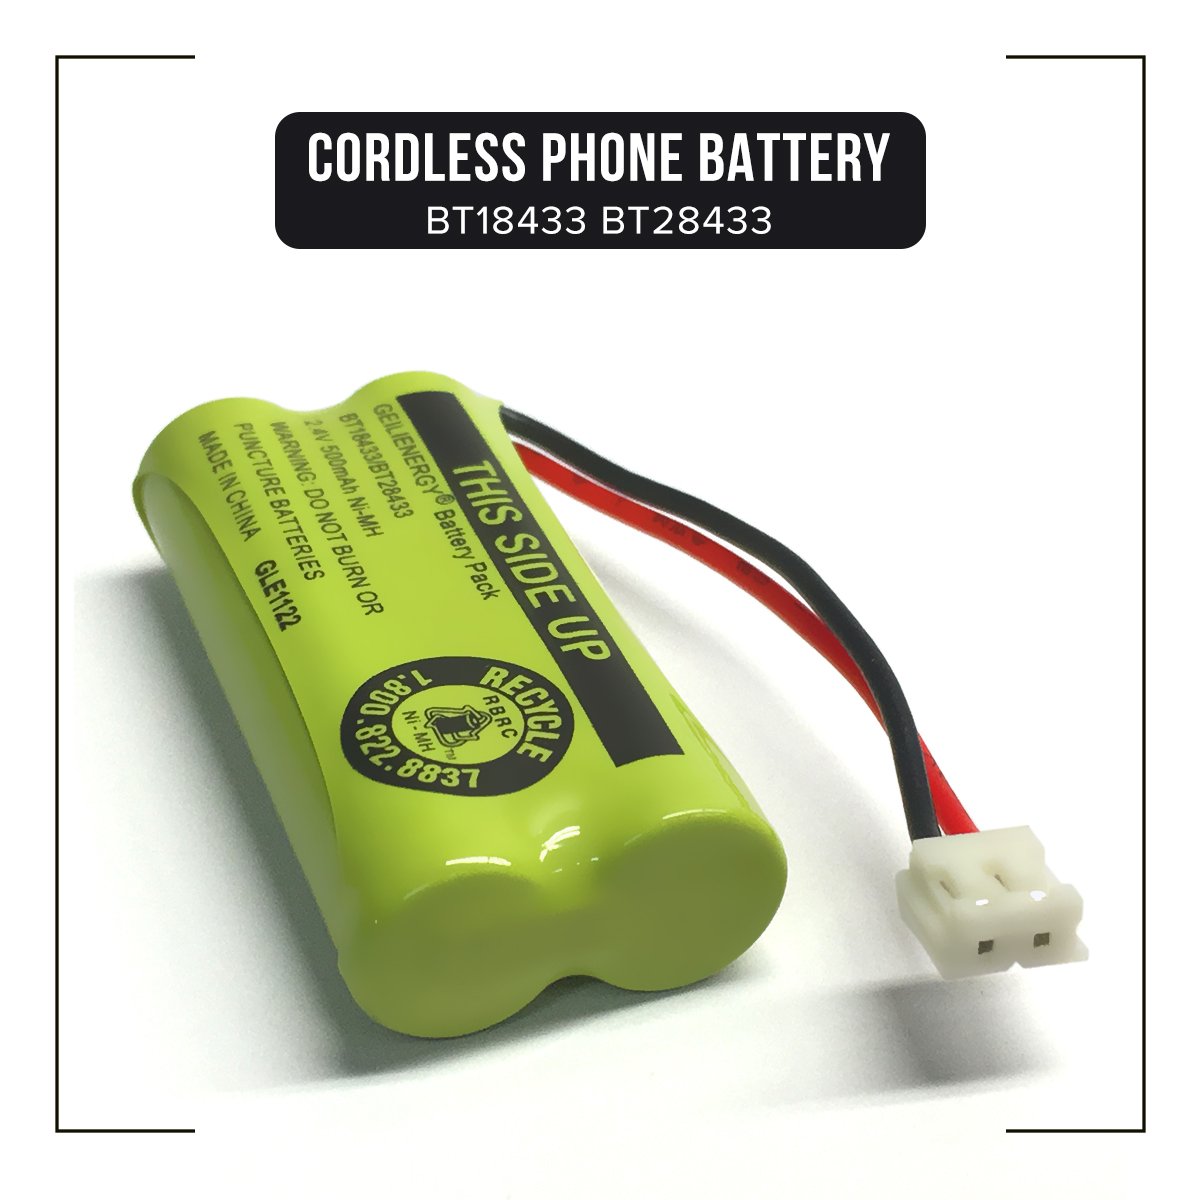 AT&T  BT-18433 Cordless Phone Battery